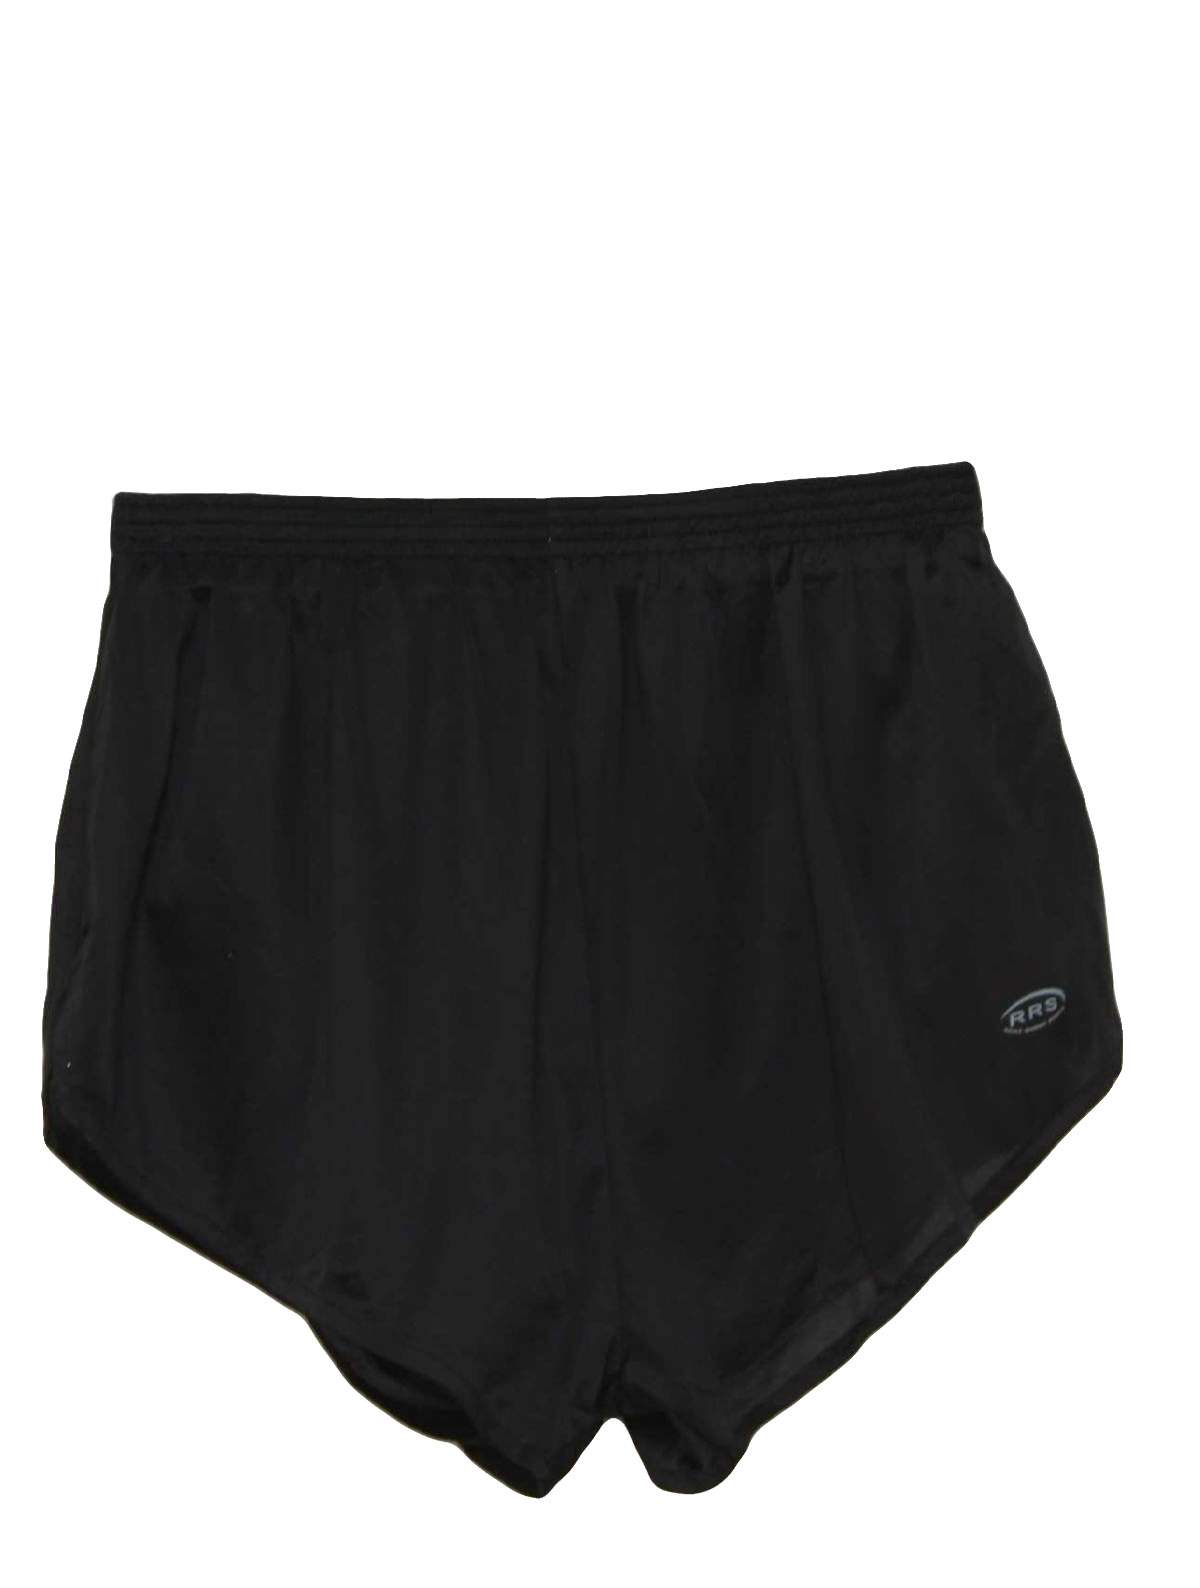 80's Vintage Shorts: 80s -RRS- Mens black background nylon blend, brief ...